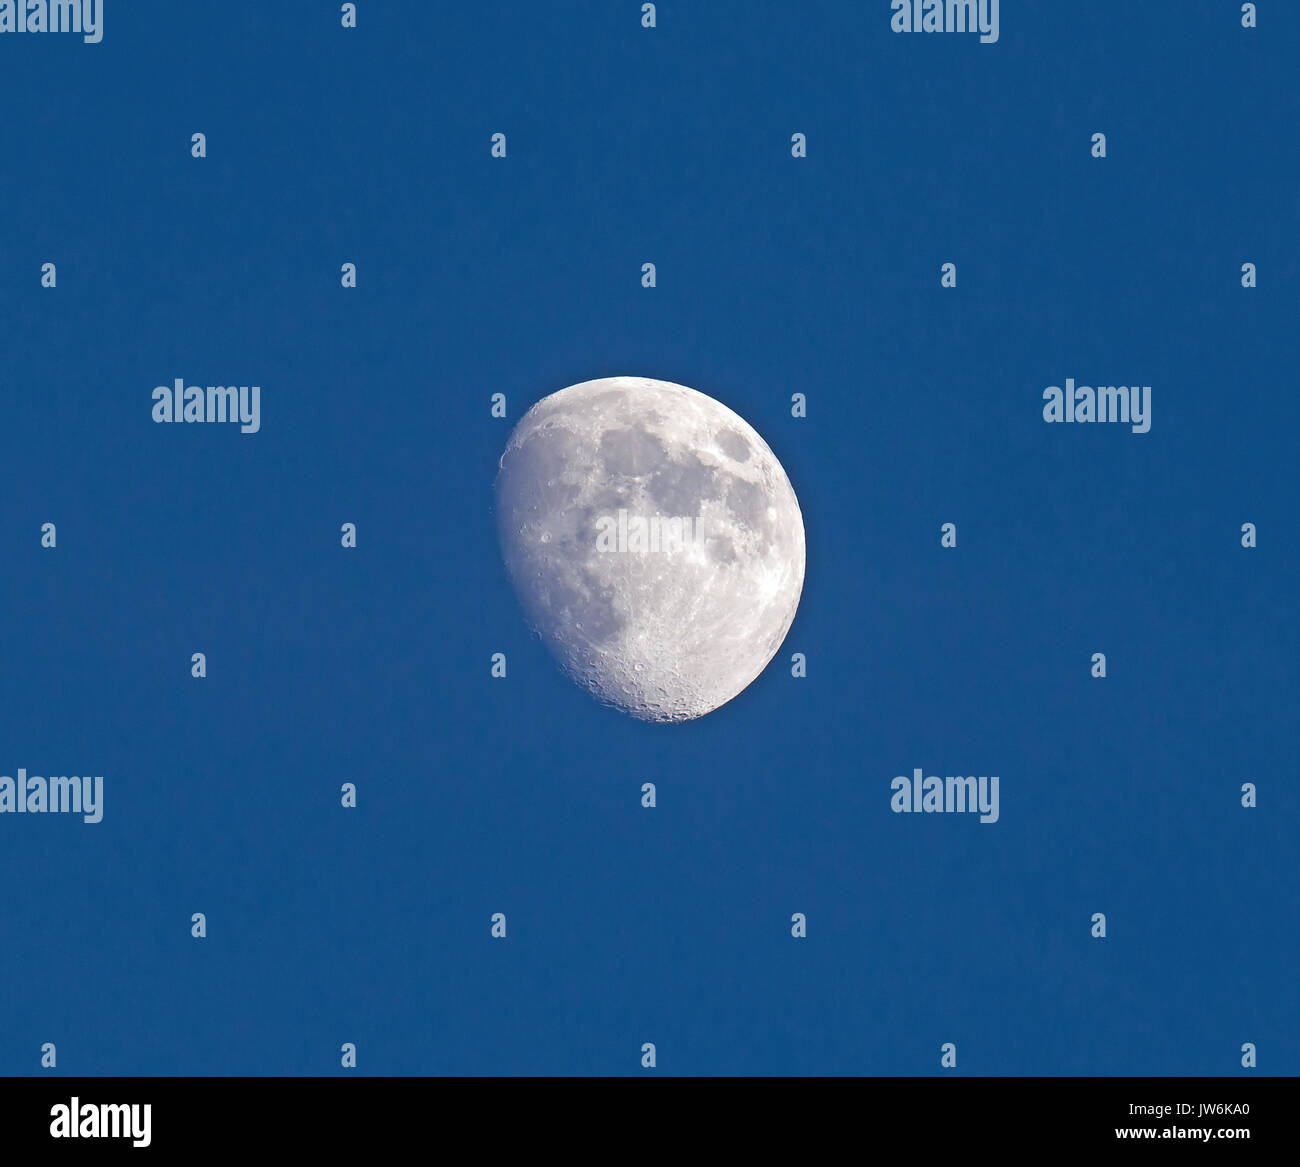 Waxing Gibbous Mond im blauen Himmel im Juli Mitte Abend. Stockfoto